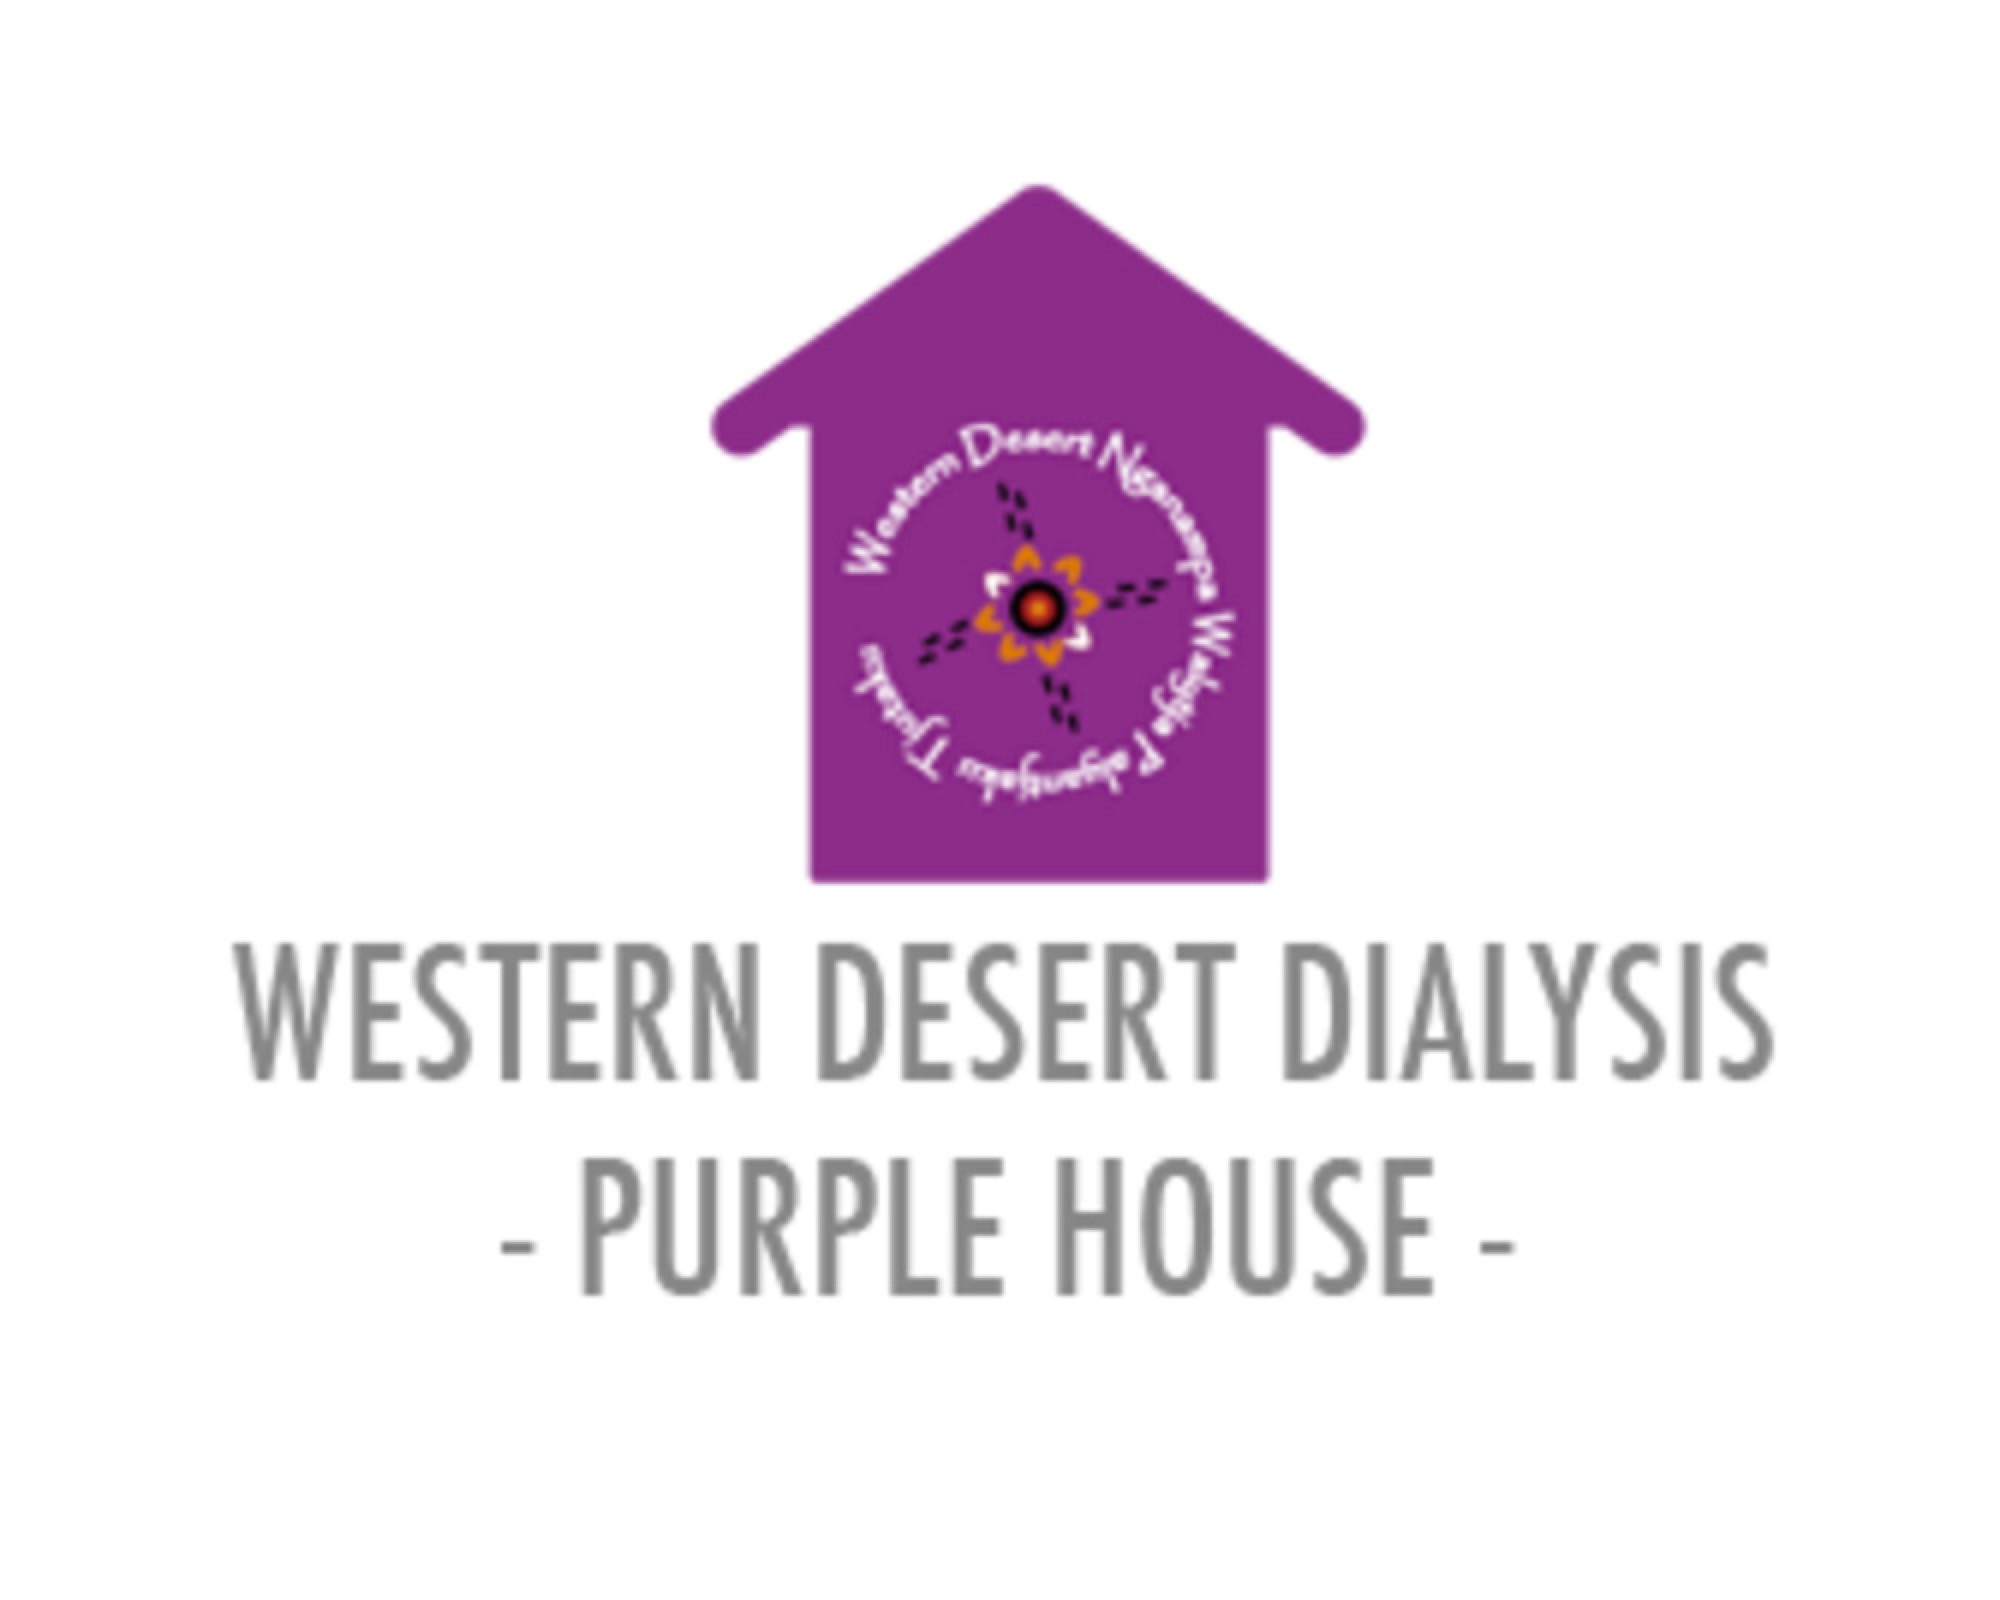 PURPLE HOUSE PROJECT - WESTERN DESERT DIALYSIS